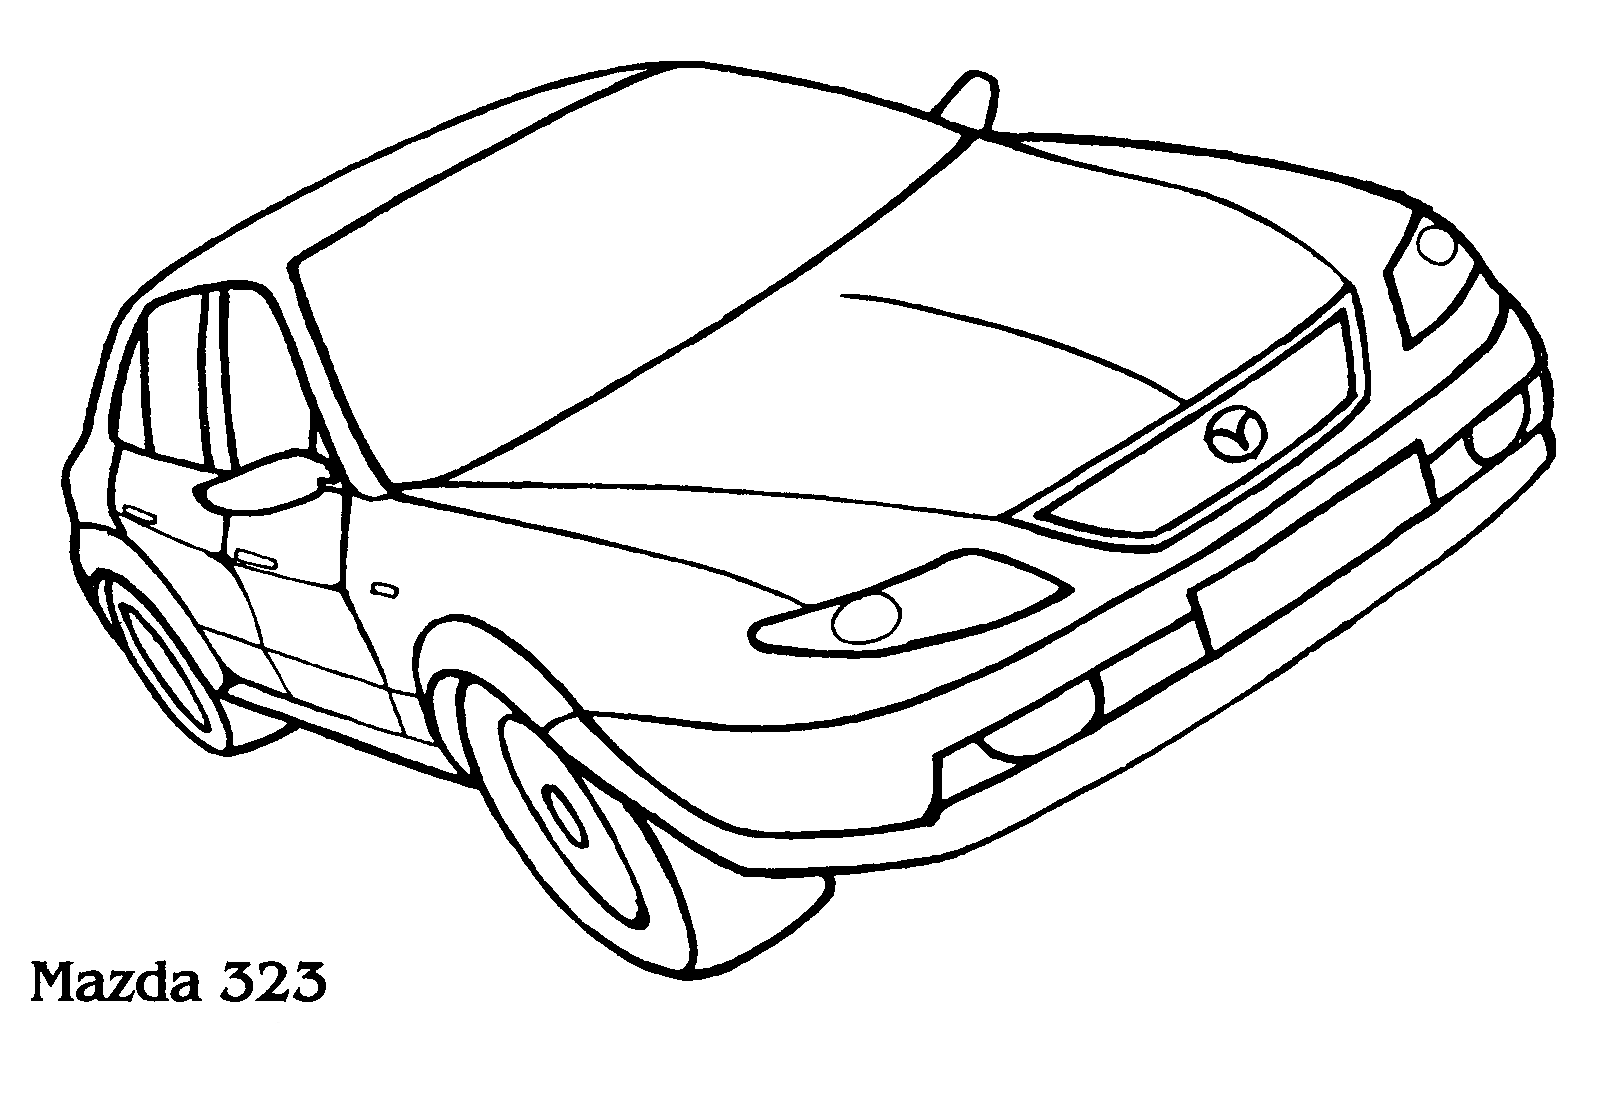 Coloring page Mazda 323